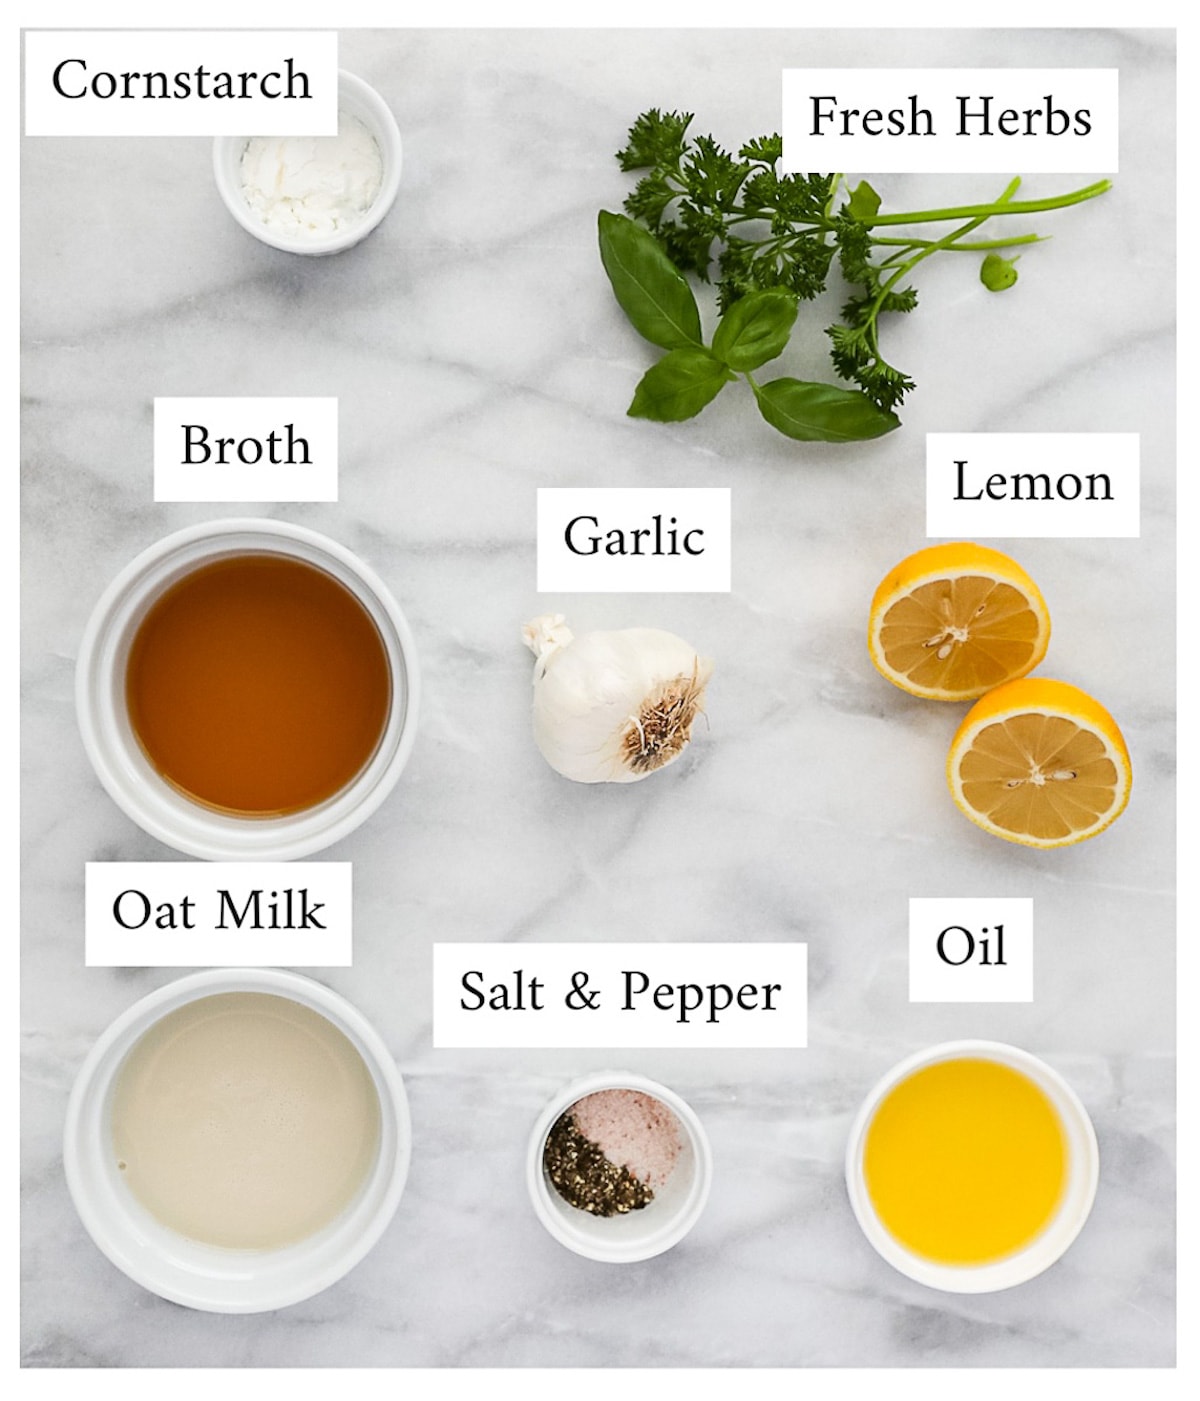 Labeled ingredients including: cornstarch, fresh herbs, broth, garlic, lemon, oat milk, salt and pepper, oil